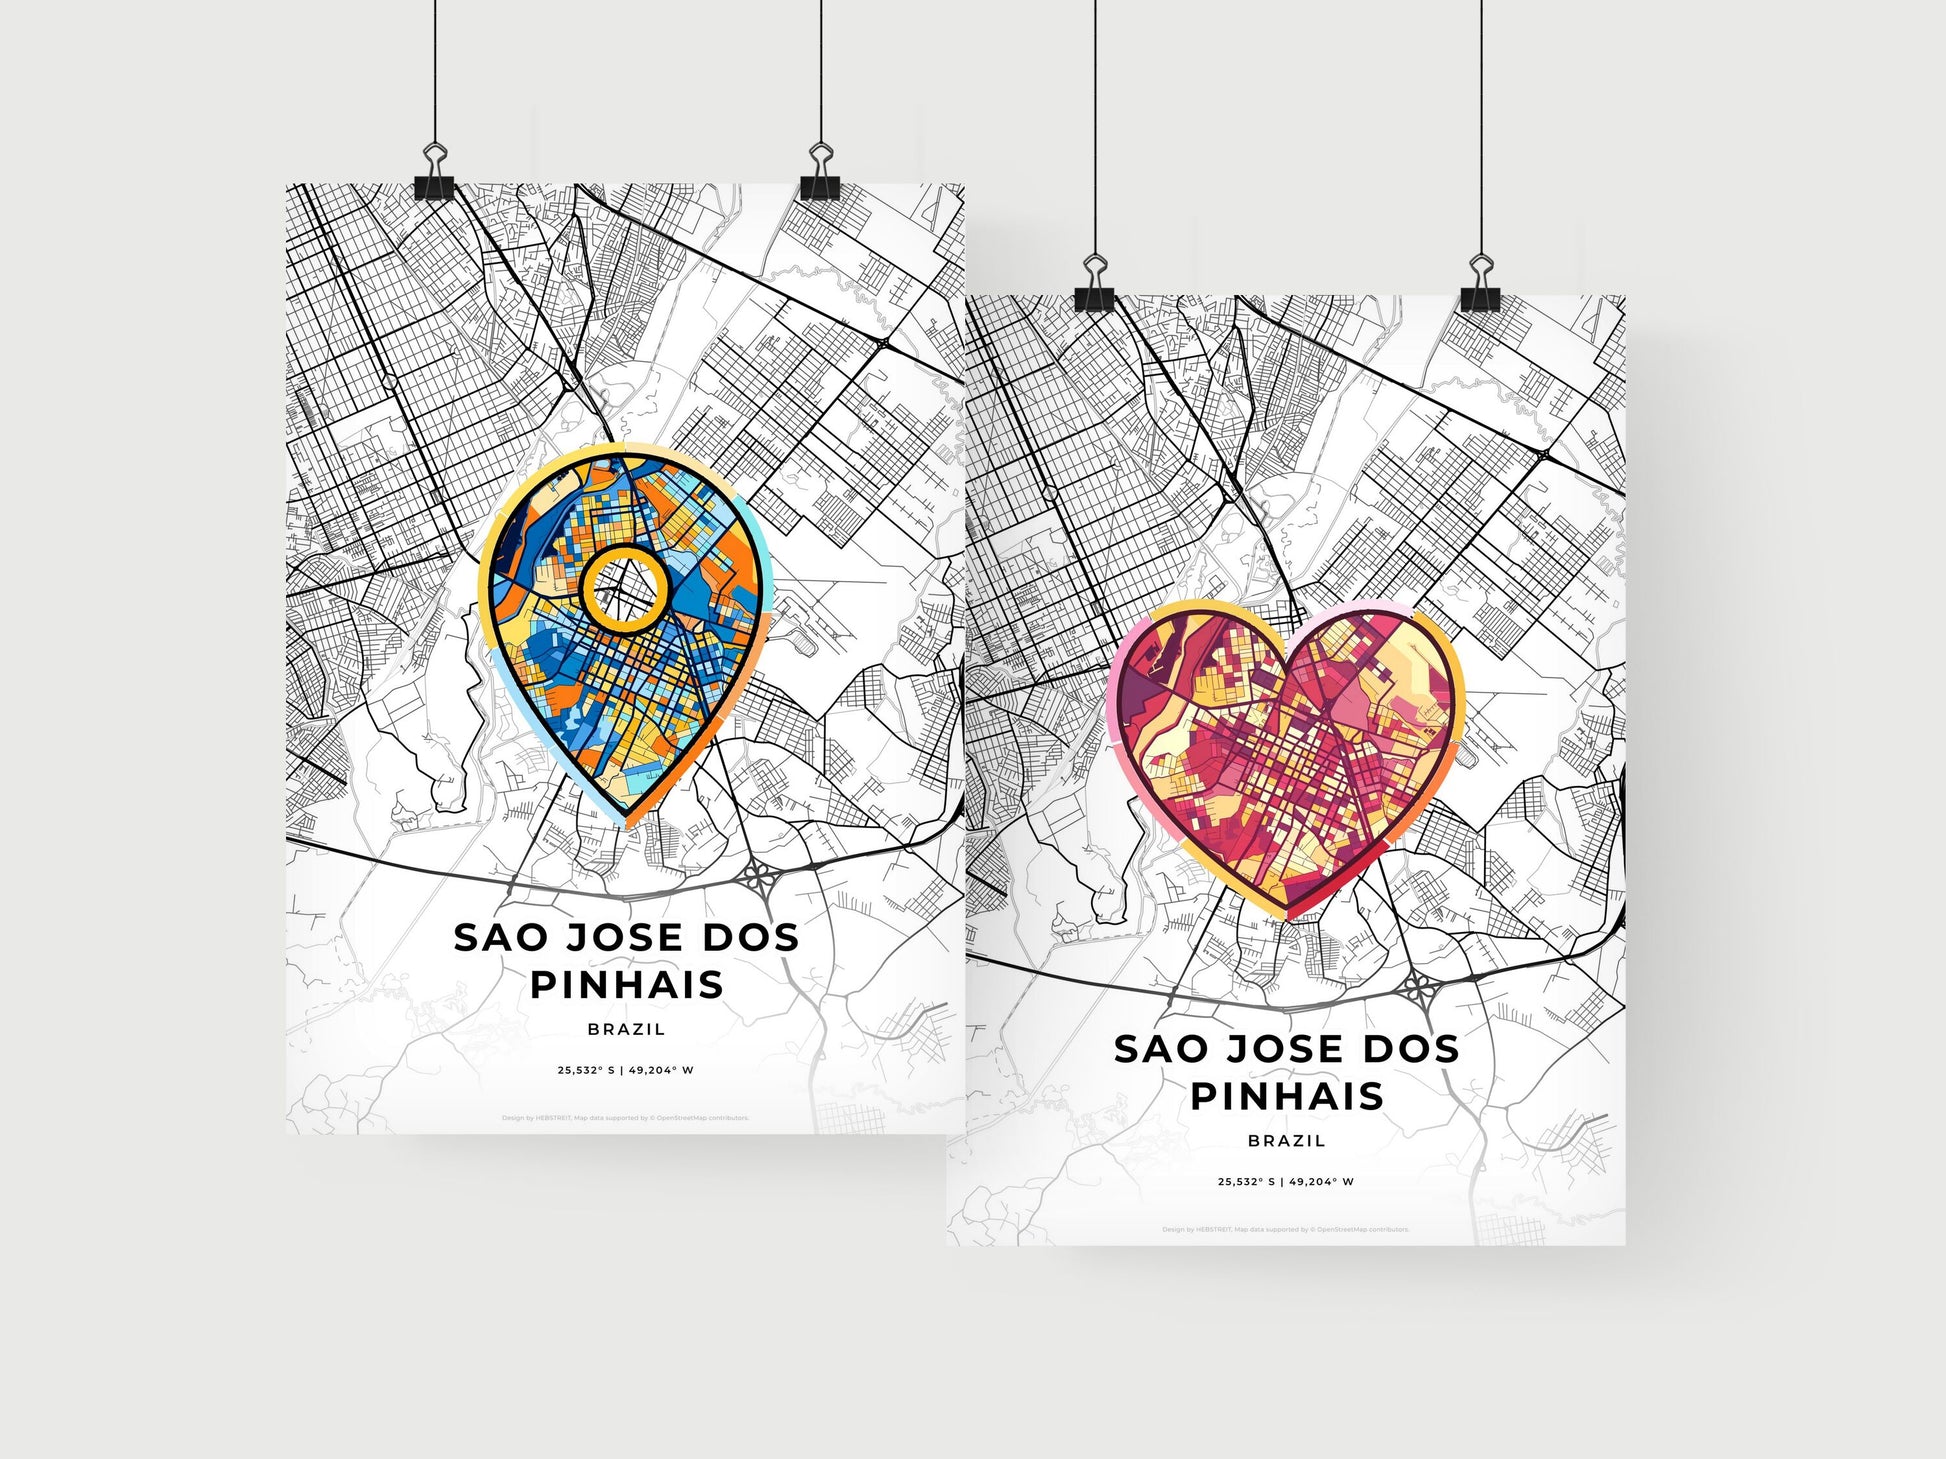 SAO JOSE DOS PINHAIS BRAZIL minimal art map with a colorful icon.